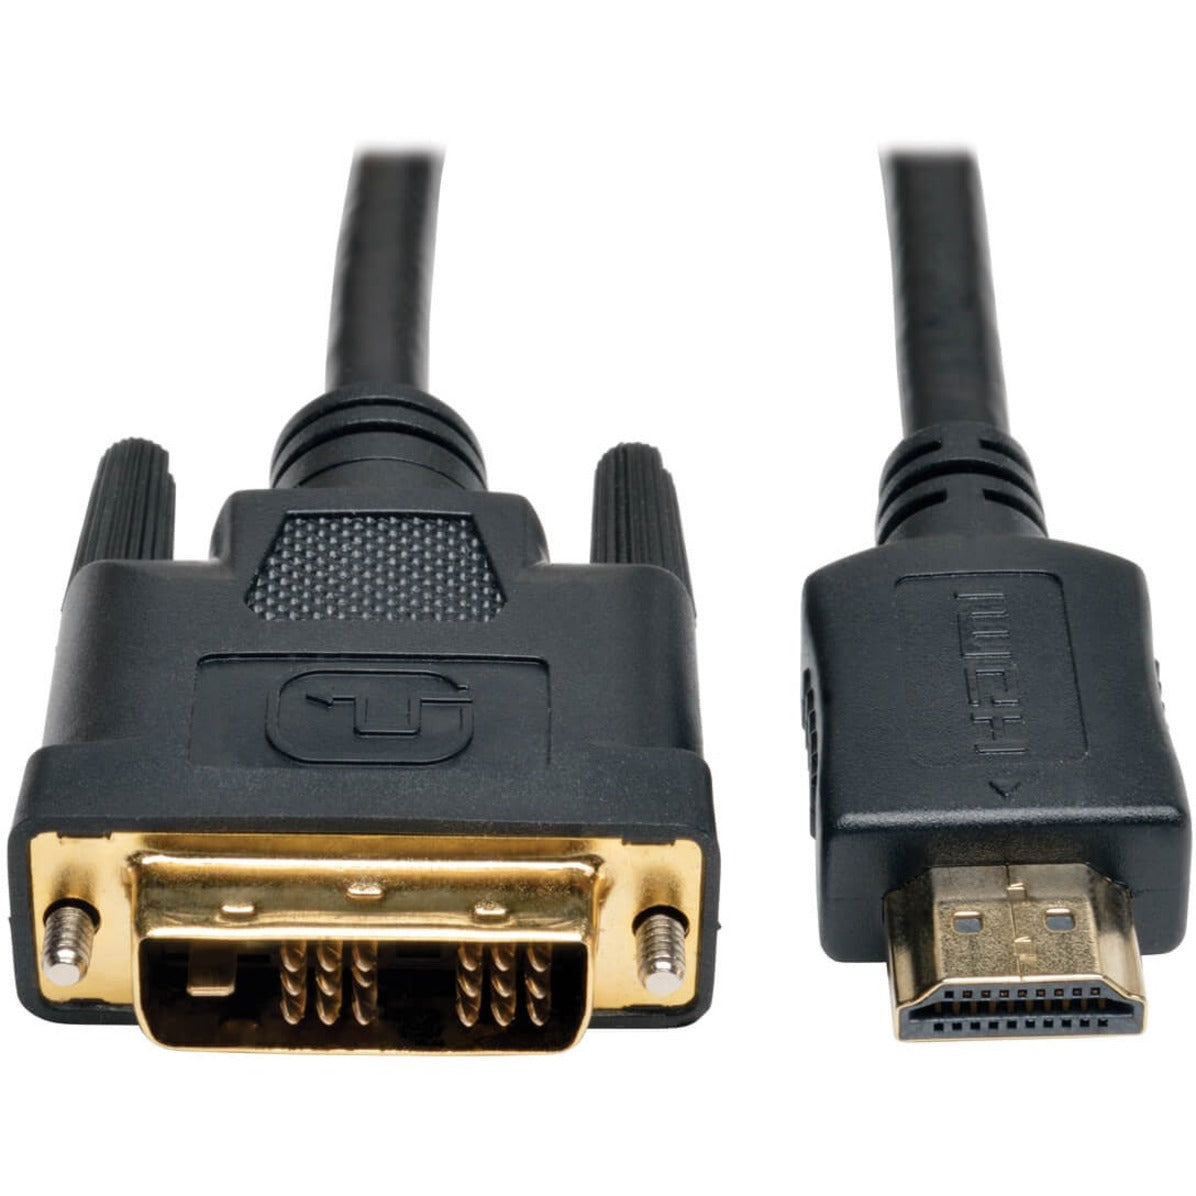 Tripp Lite: トリップライト HDMI: HDMI DVI: DVI 20-ft: 20フィート EMI/RF Protection: EMI/RF保護 Gold-Plated Connectors: 金メッキコネクタ